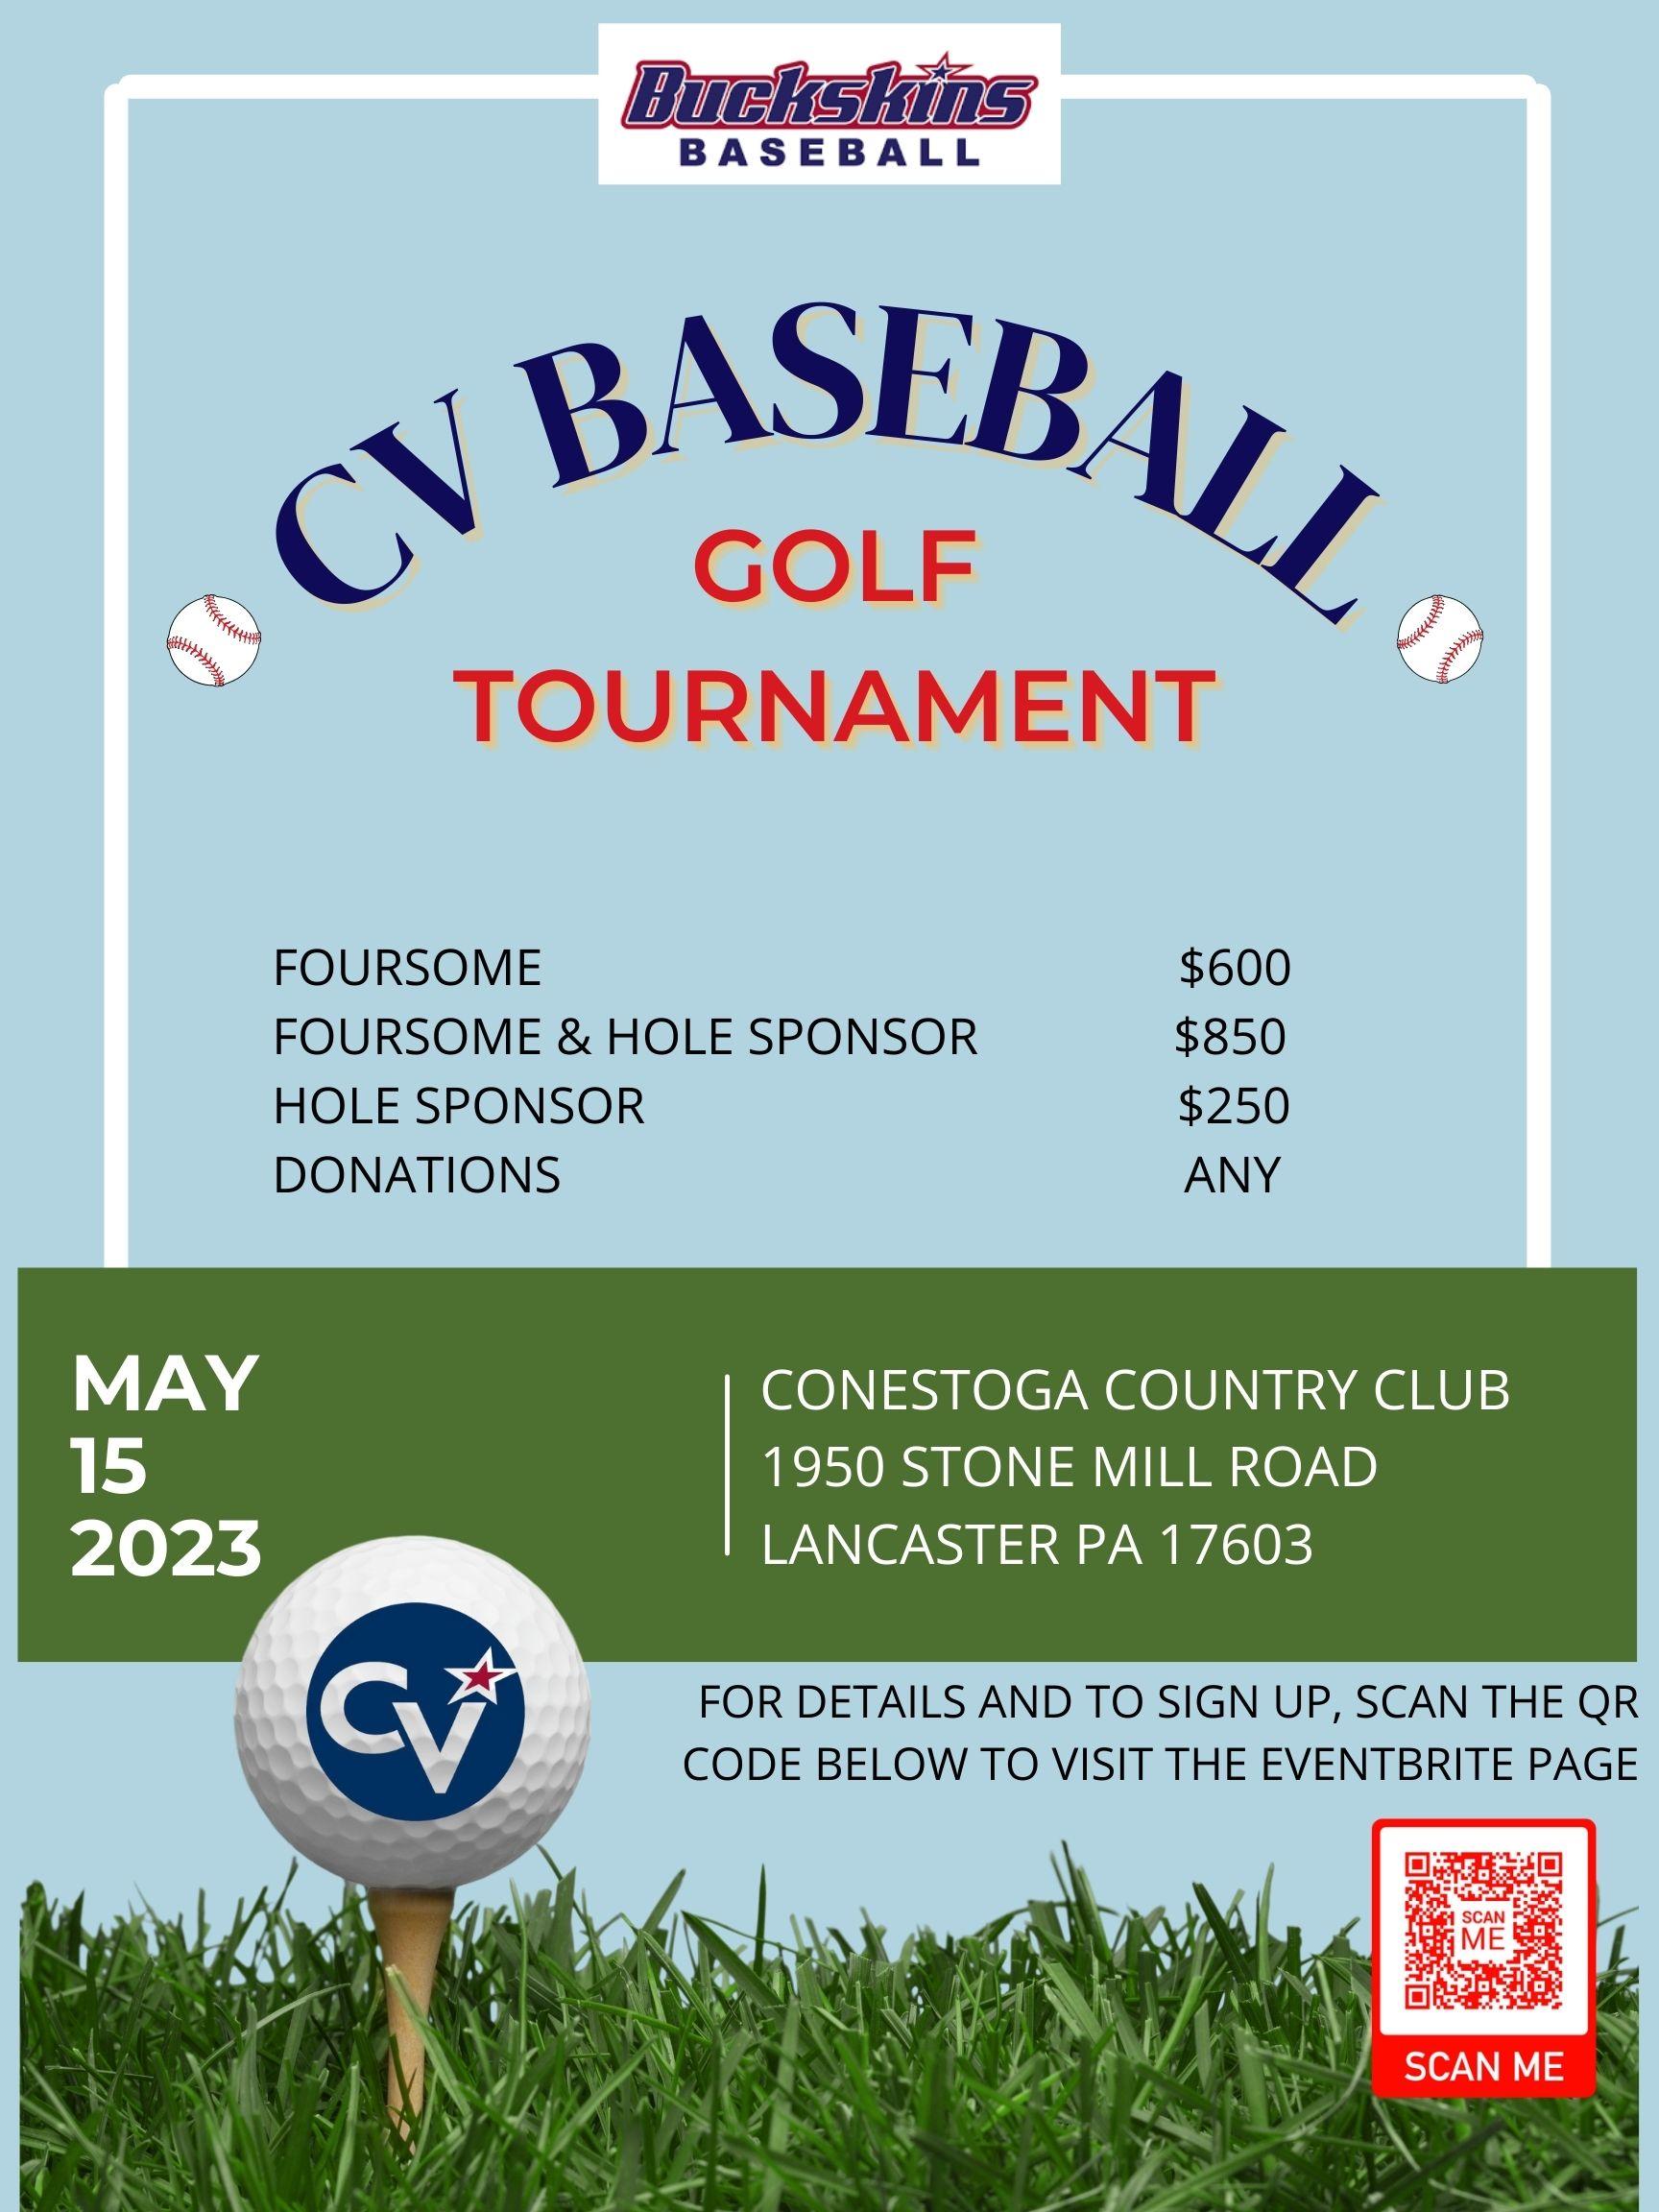 CV Baseball Golf Tournament